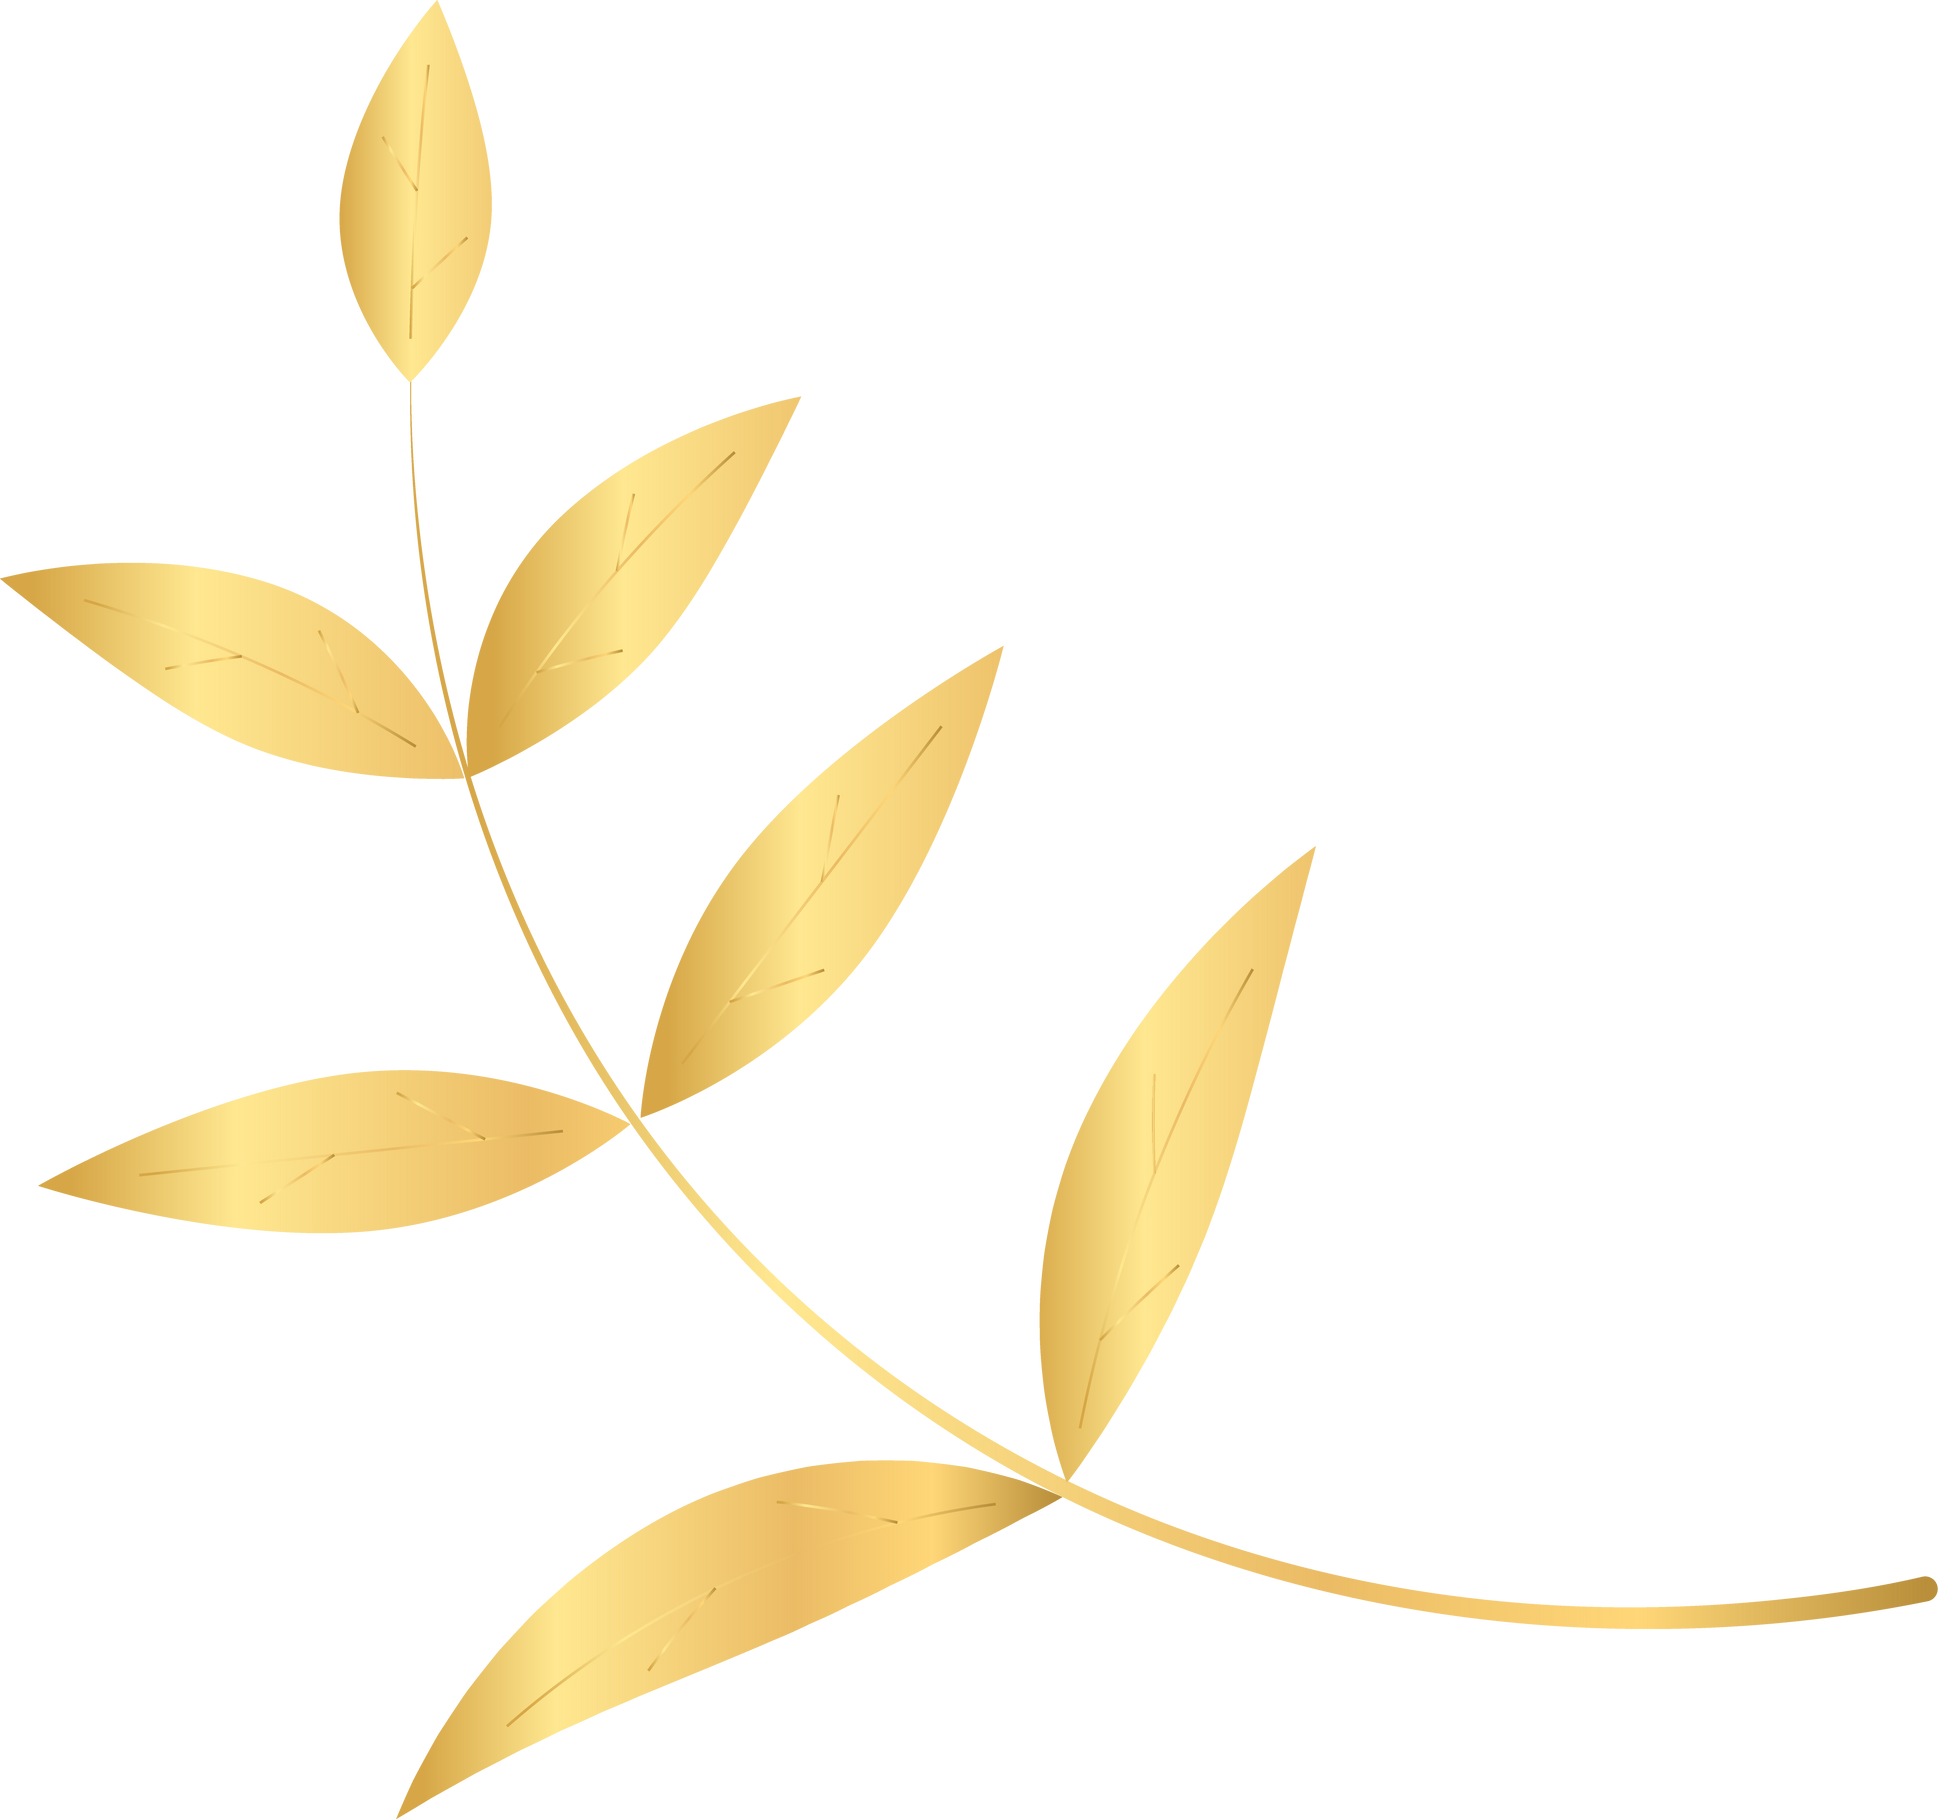 Golden Leaf And Branch For Decoration